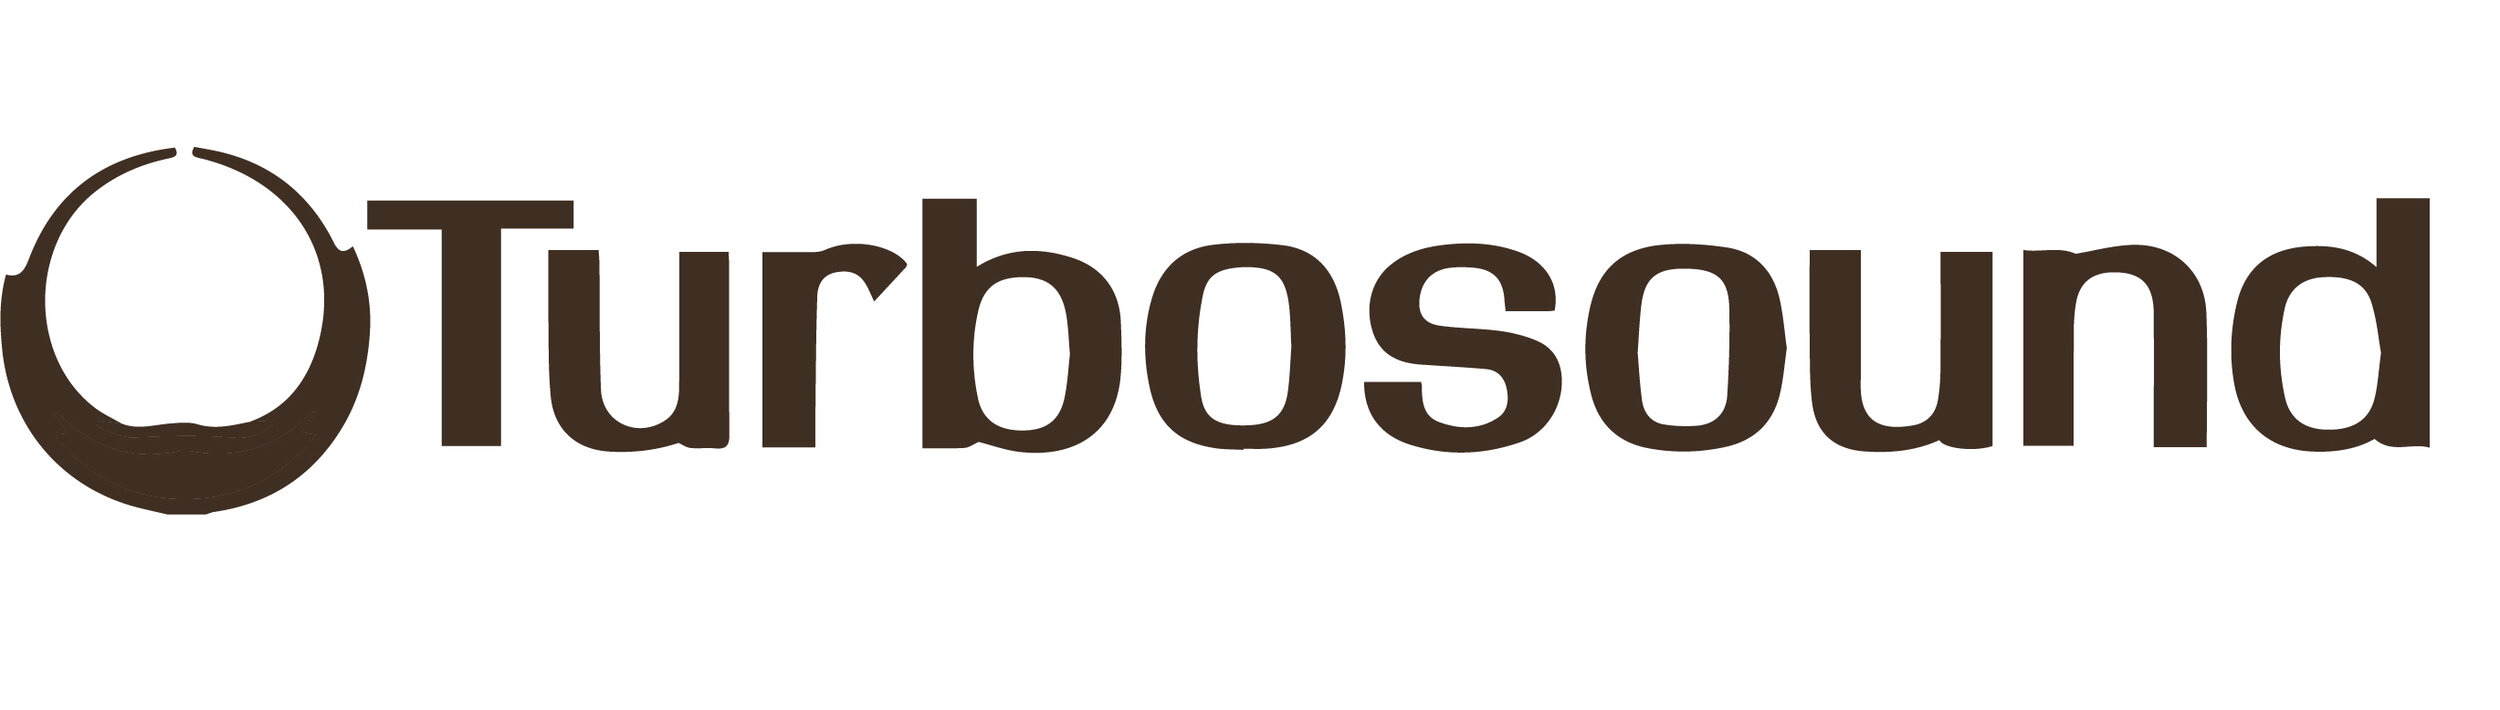 turbosound brown logo.jpg